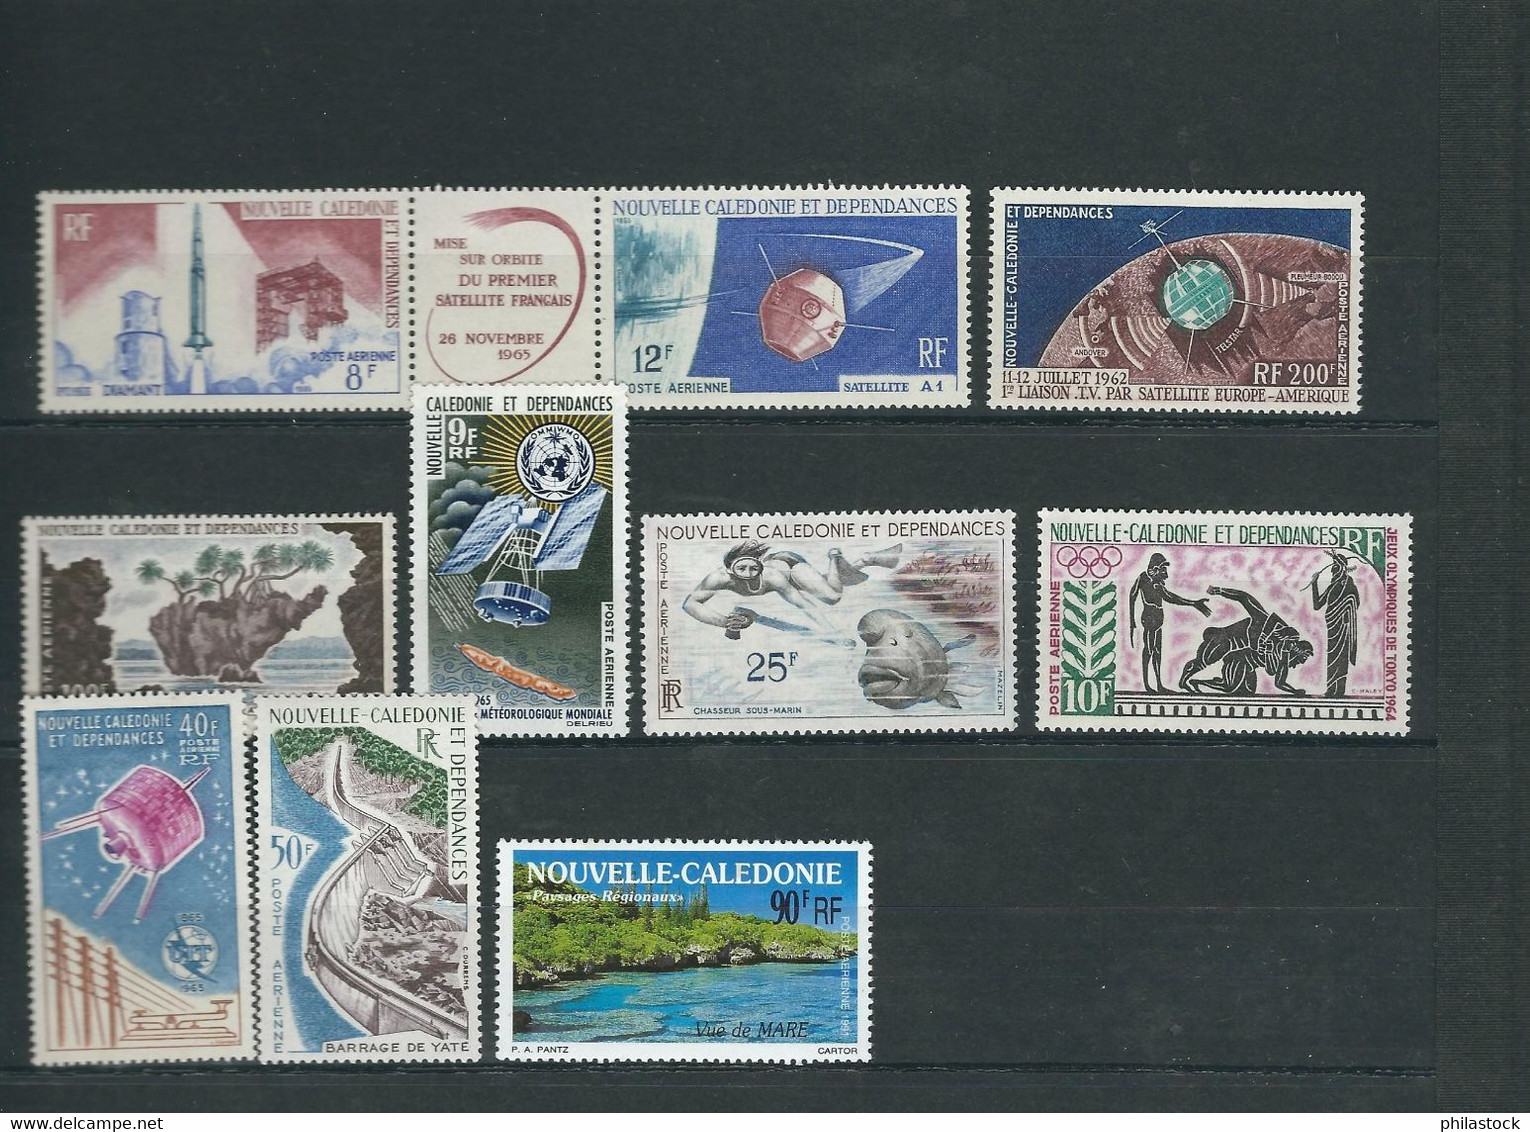 NCE Jolie collection entre 1984 & 2006 + PA tous les timbres luxes **